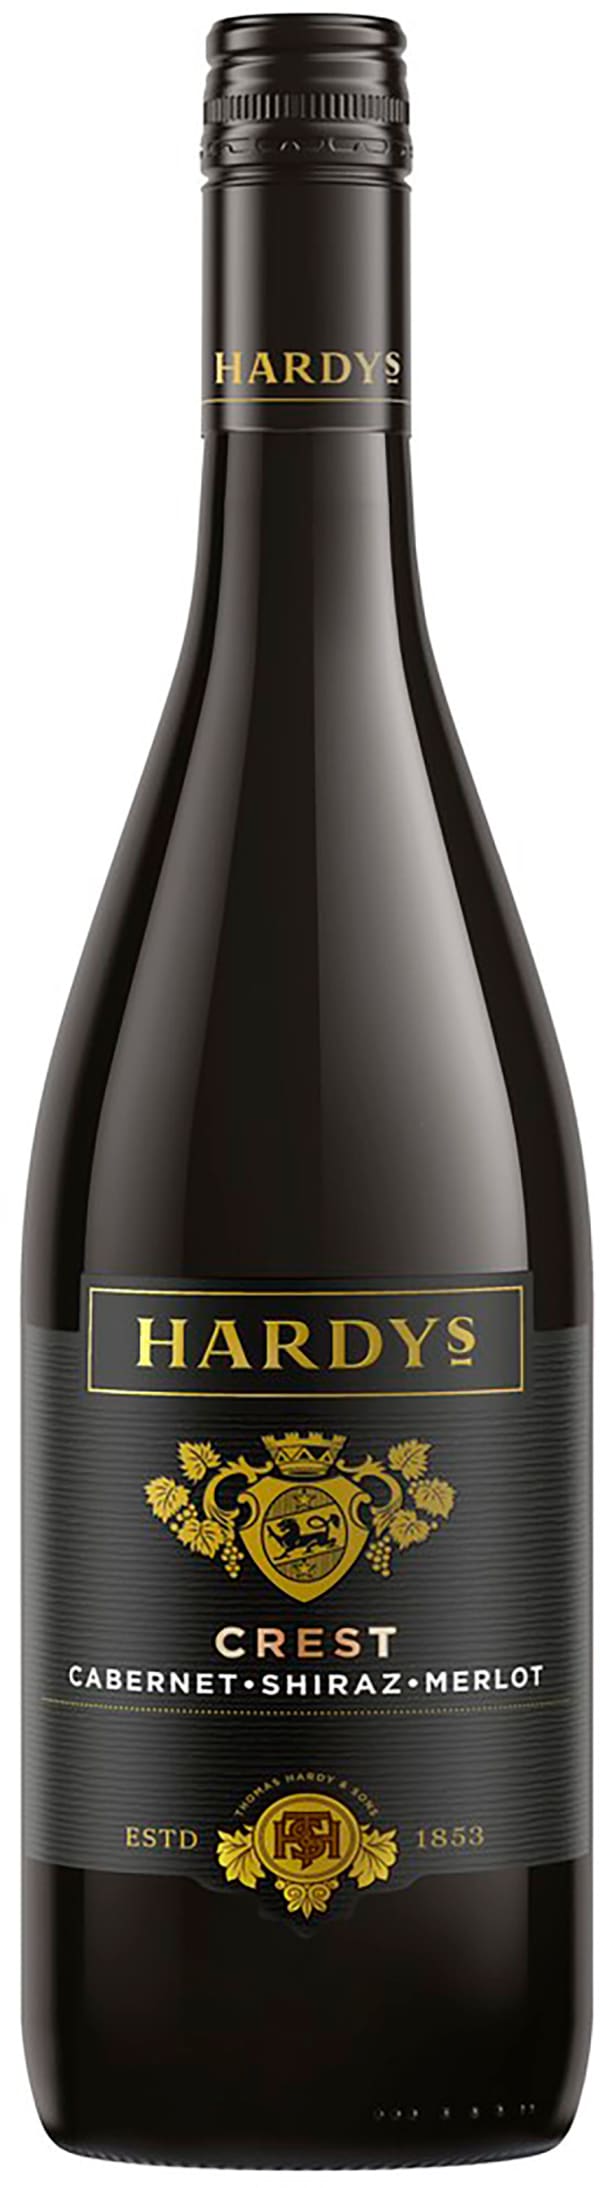 Hardys Crest Cabernet Shiraz Merlot 2017 - Red wine | Alko